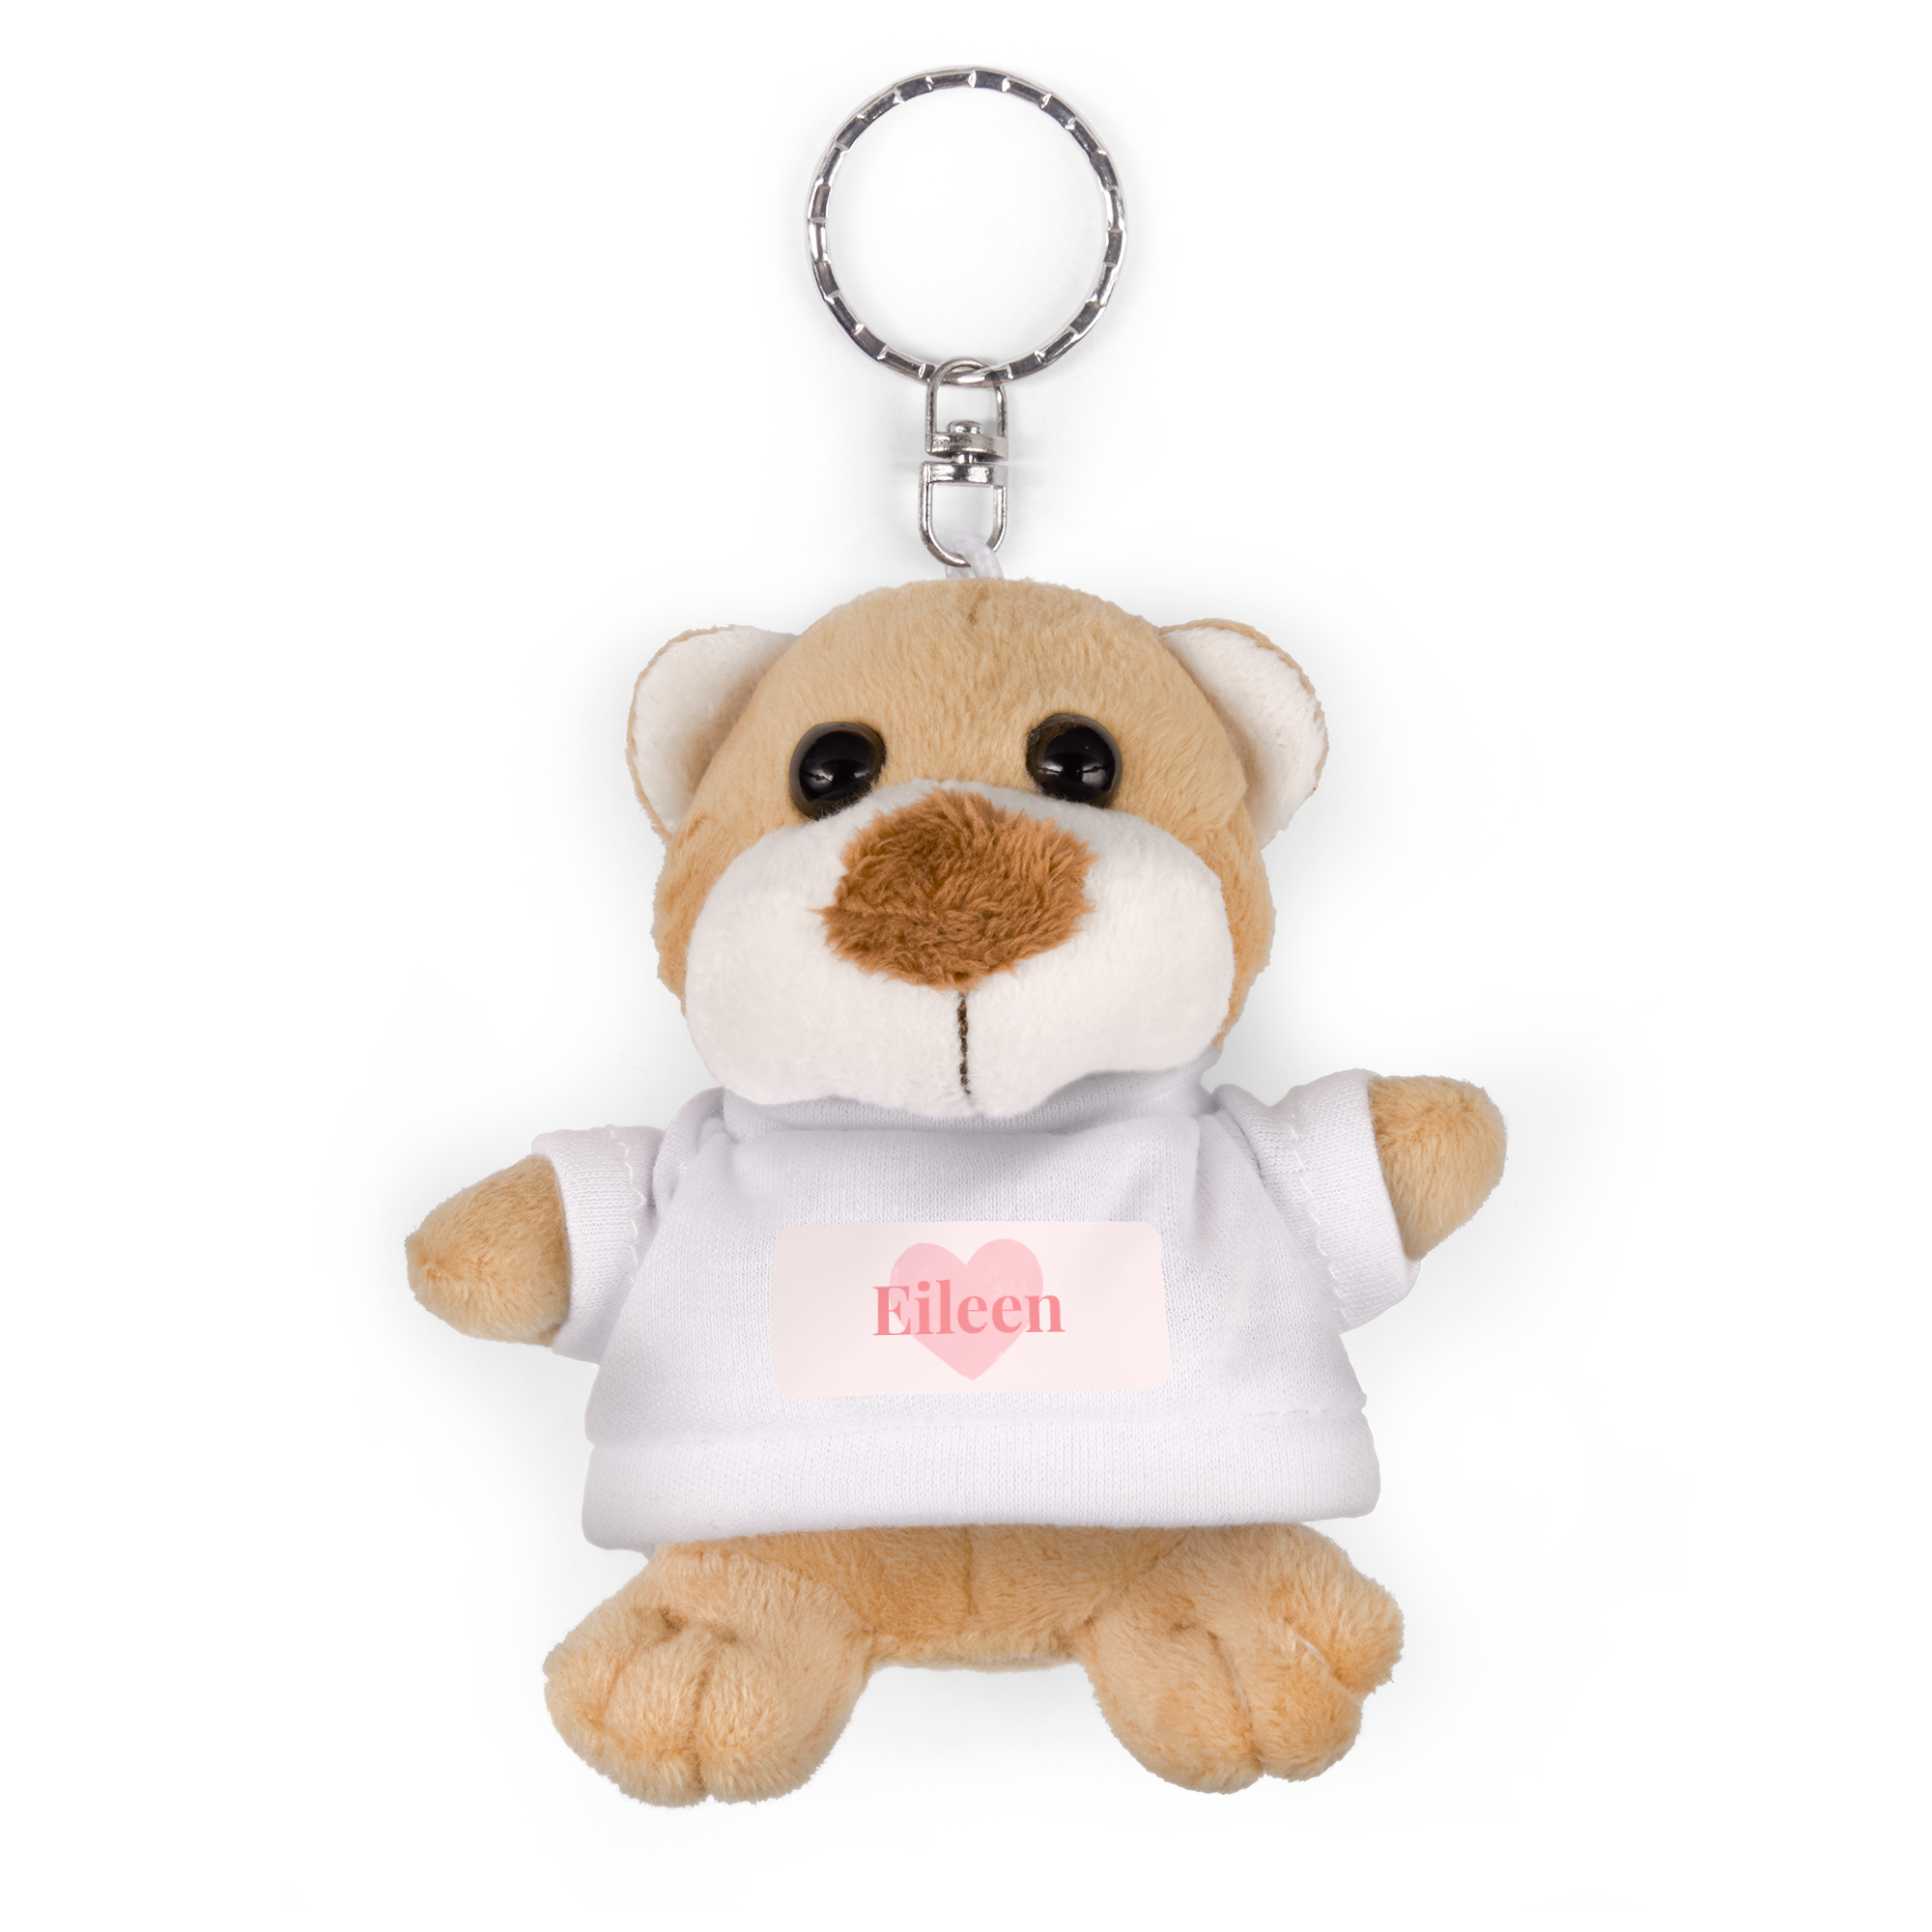 Plush key ring - Teddy bear